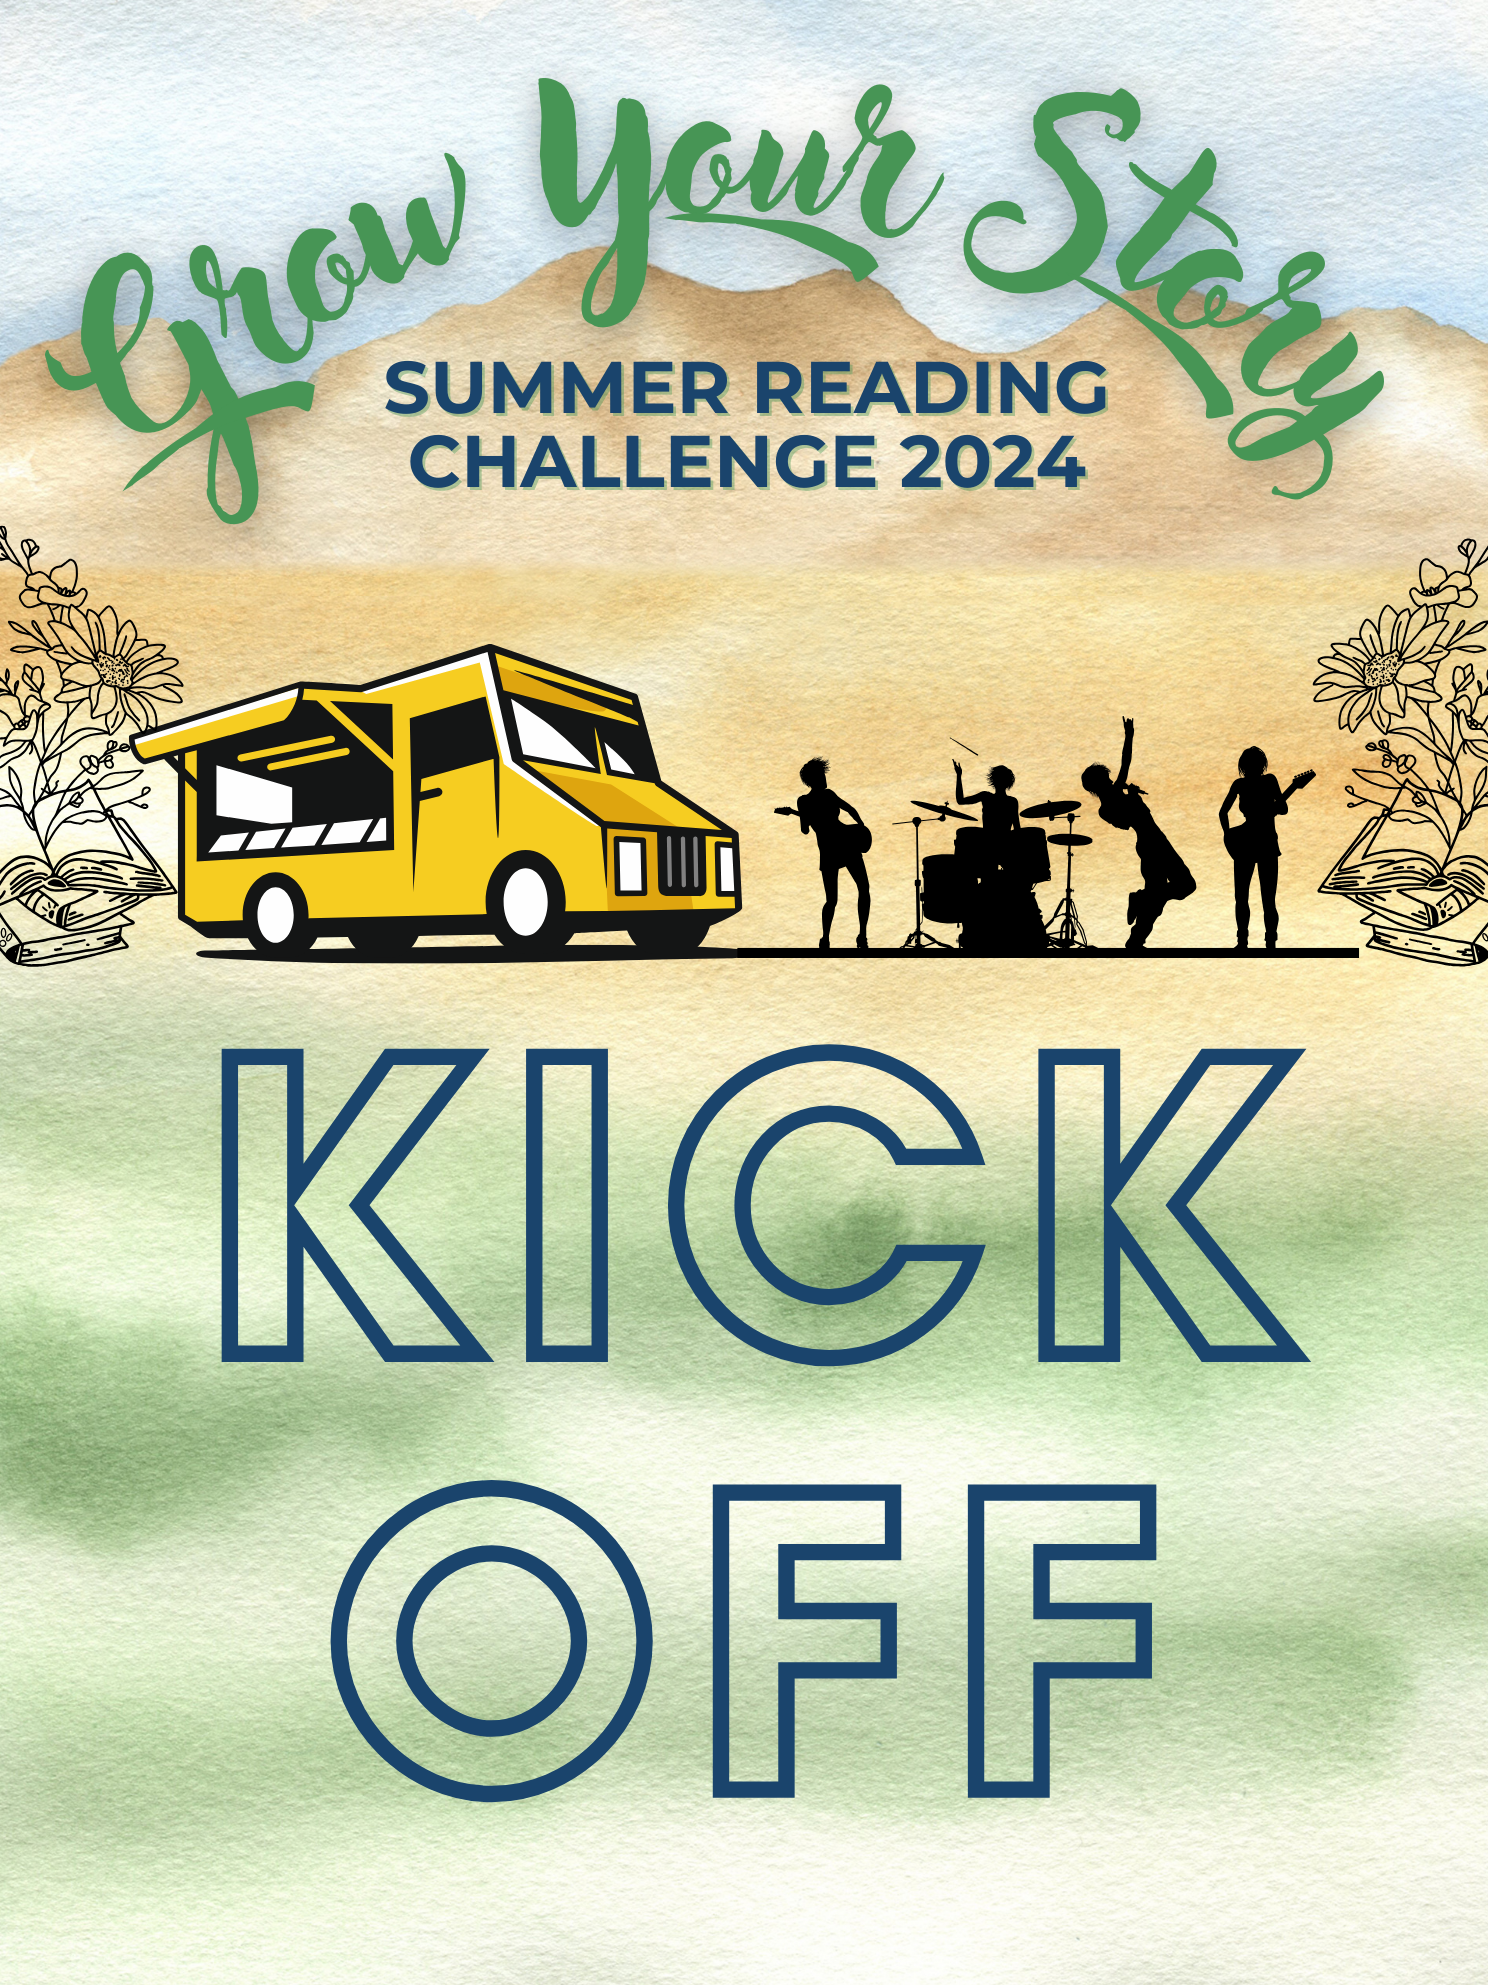 summer reading kick off event